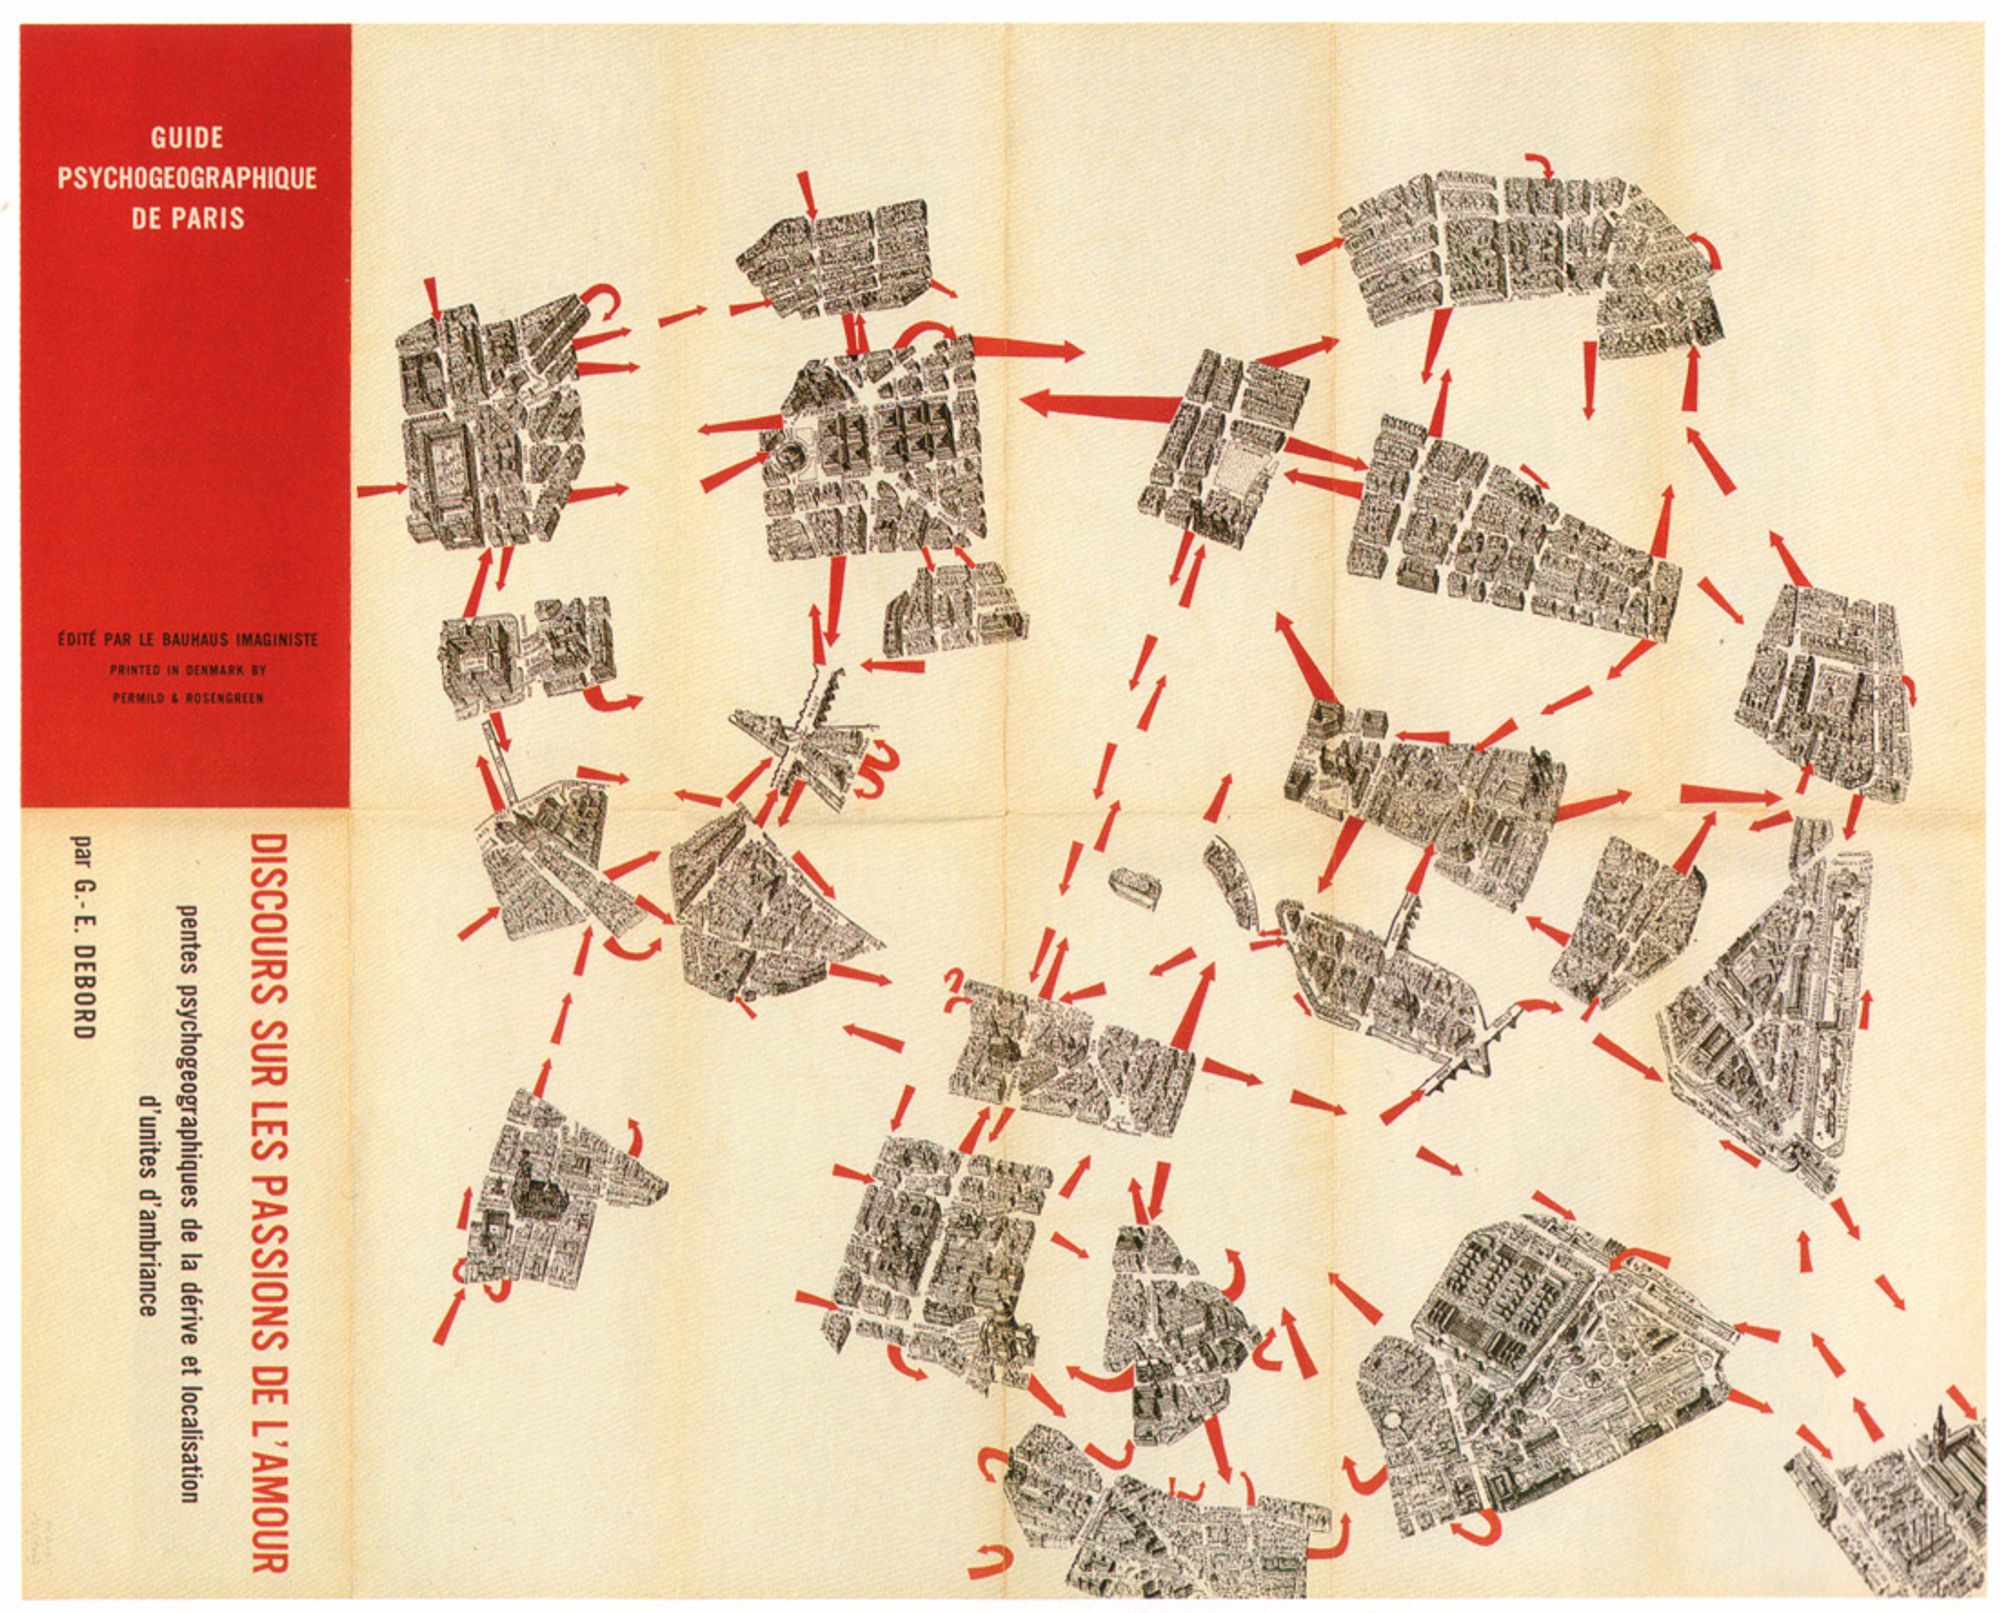 "Psychogeographic guide of Paris," Guy Debord, 1955 (Imaginary Museum)